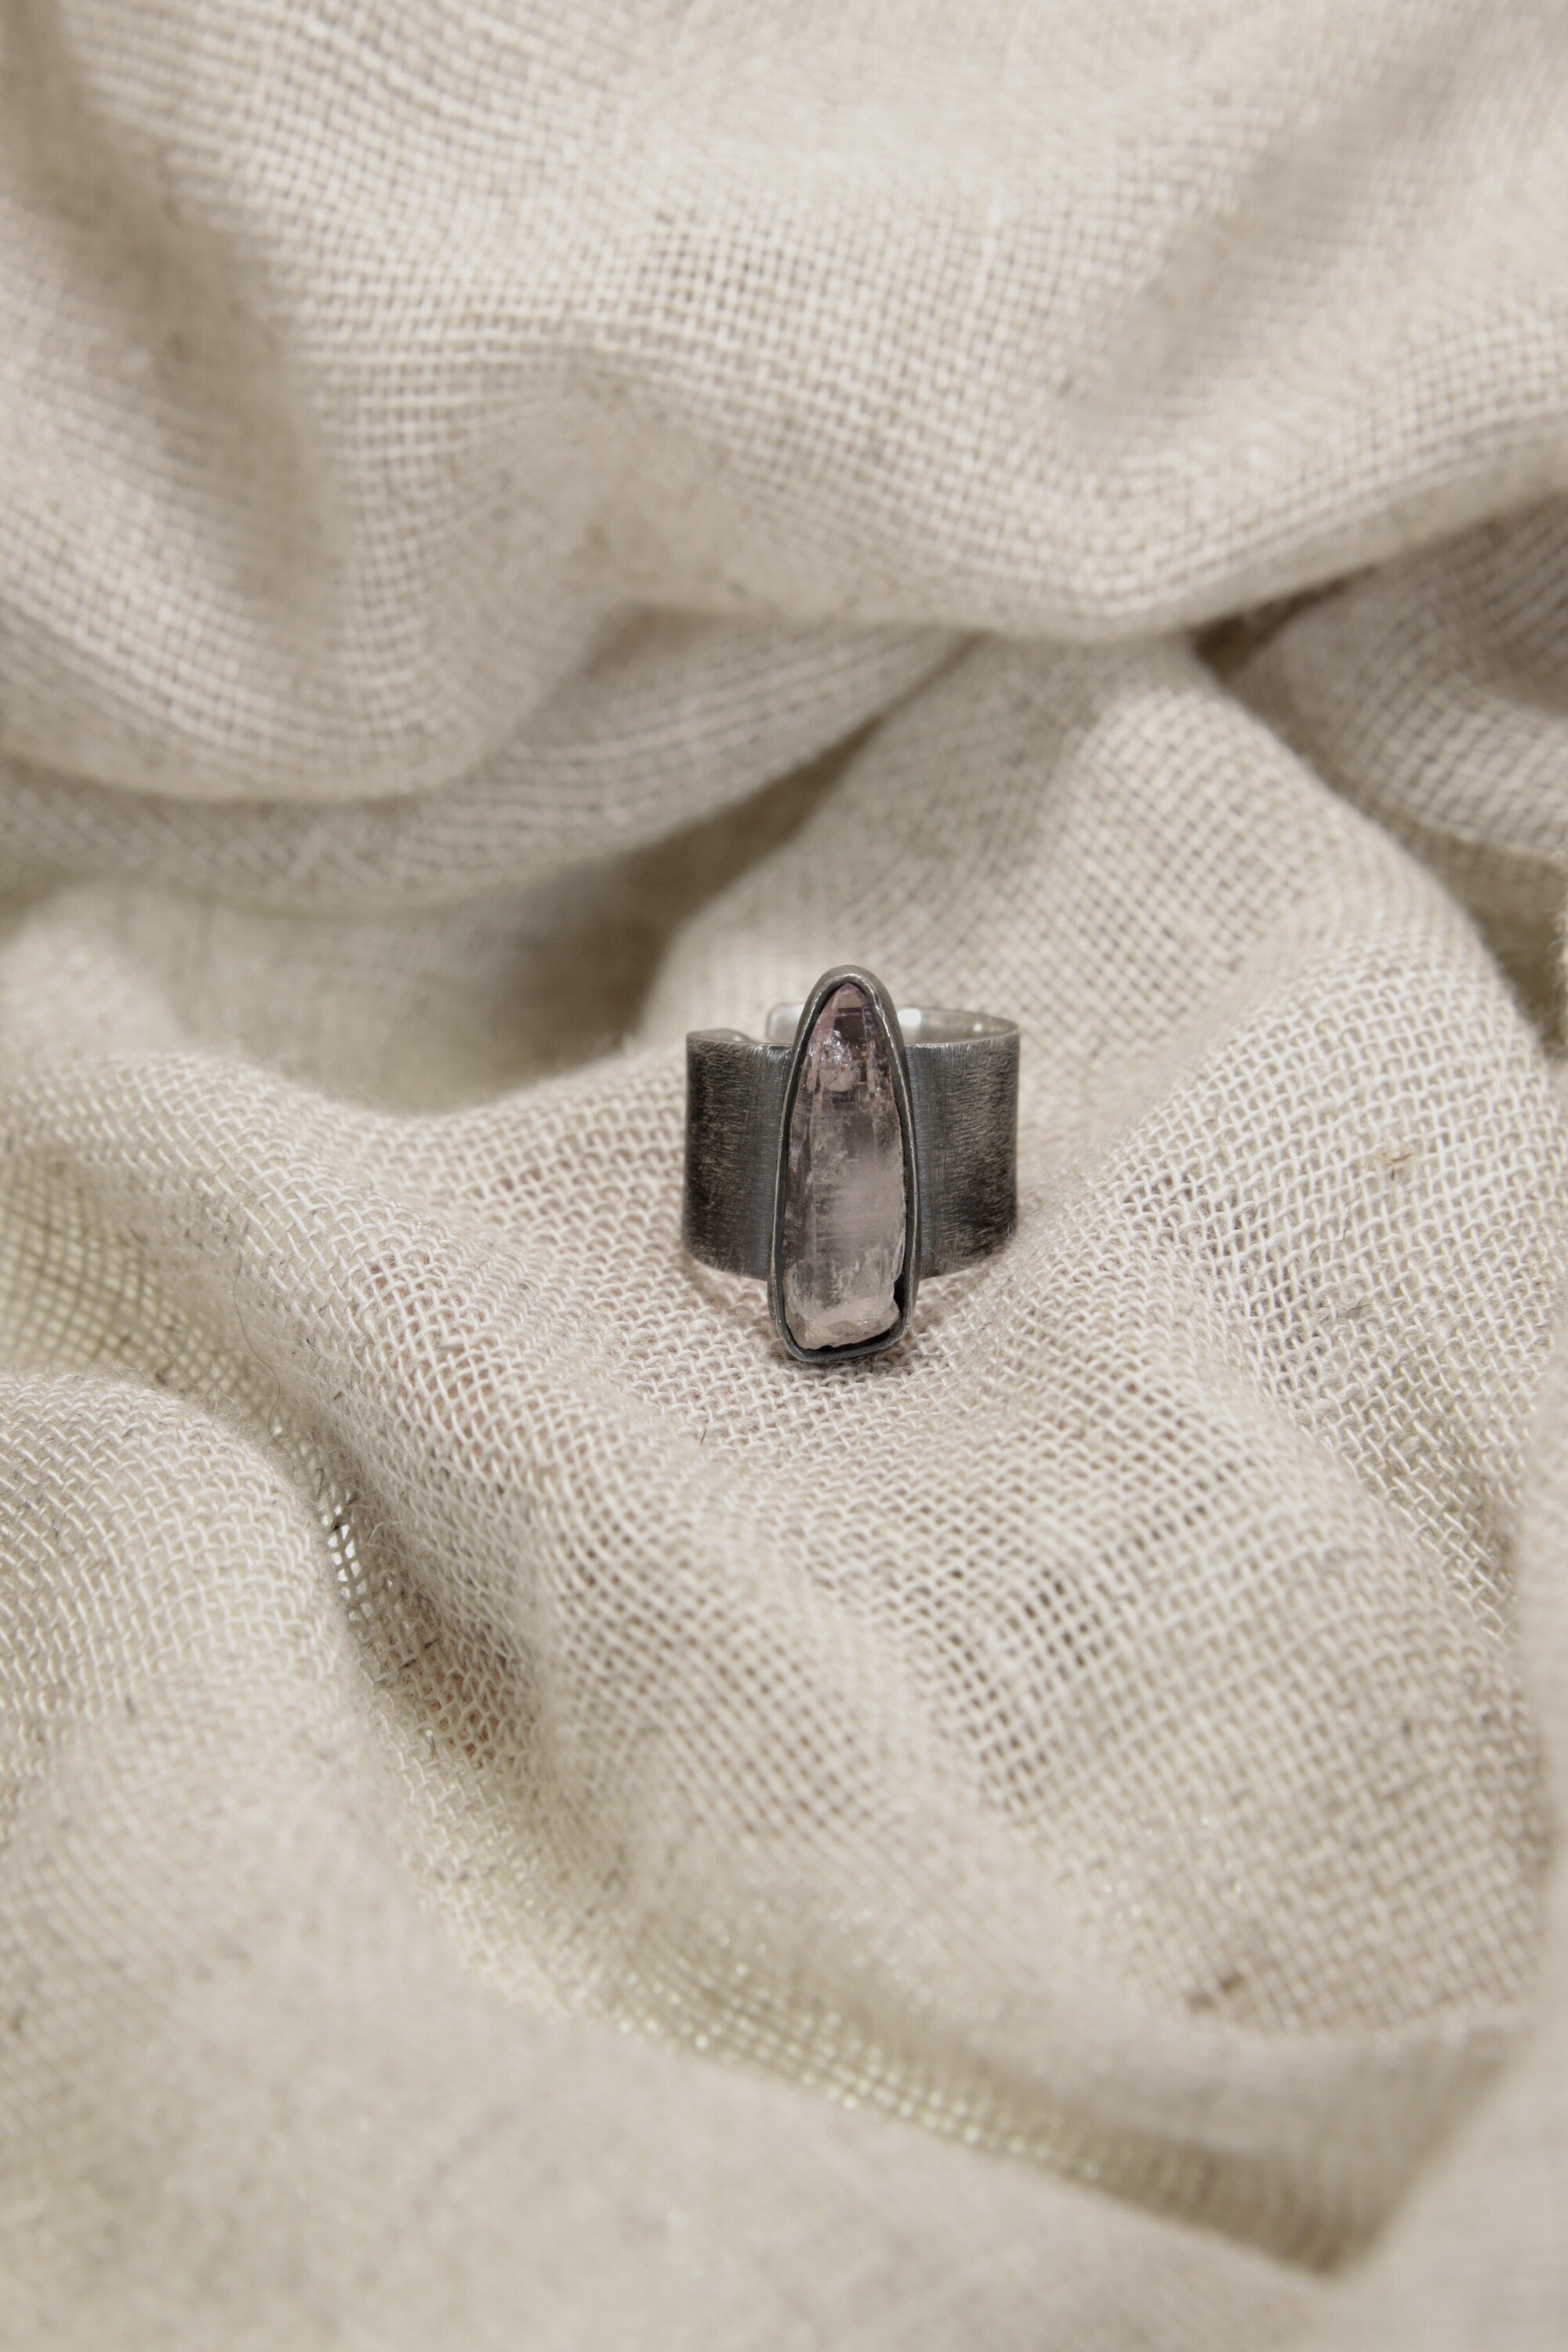 Vera Cruz Twilight: Adjustable Sterling Silver Ring with Vera Cruz Amethyst - Brush Textured - Unisex - Size 5-12 US - NO/02